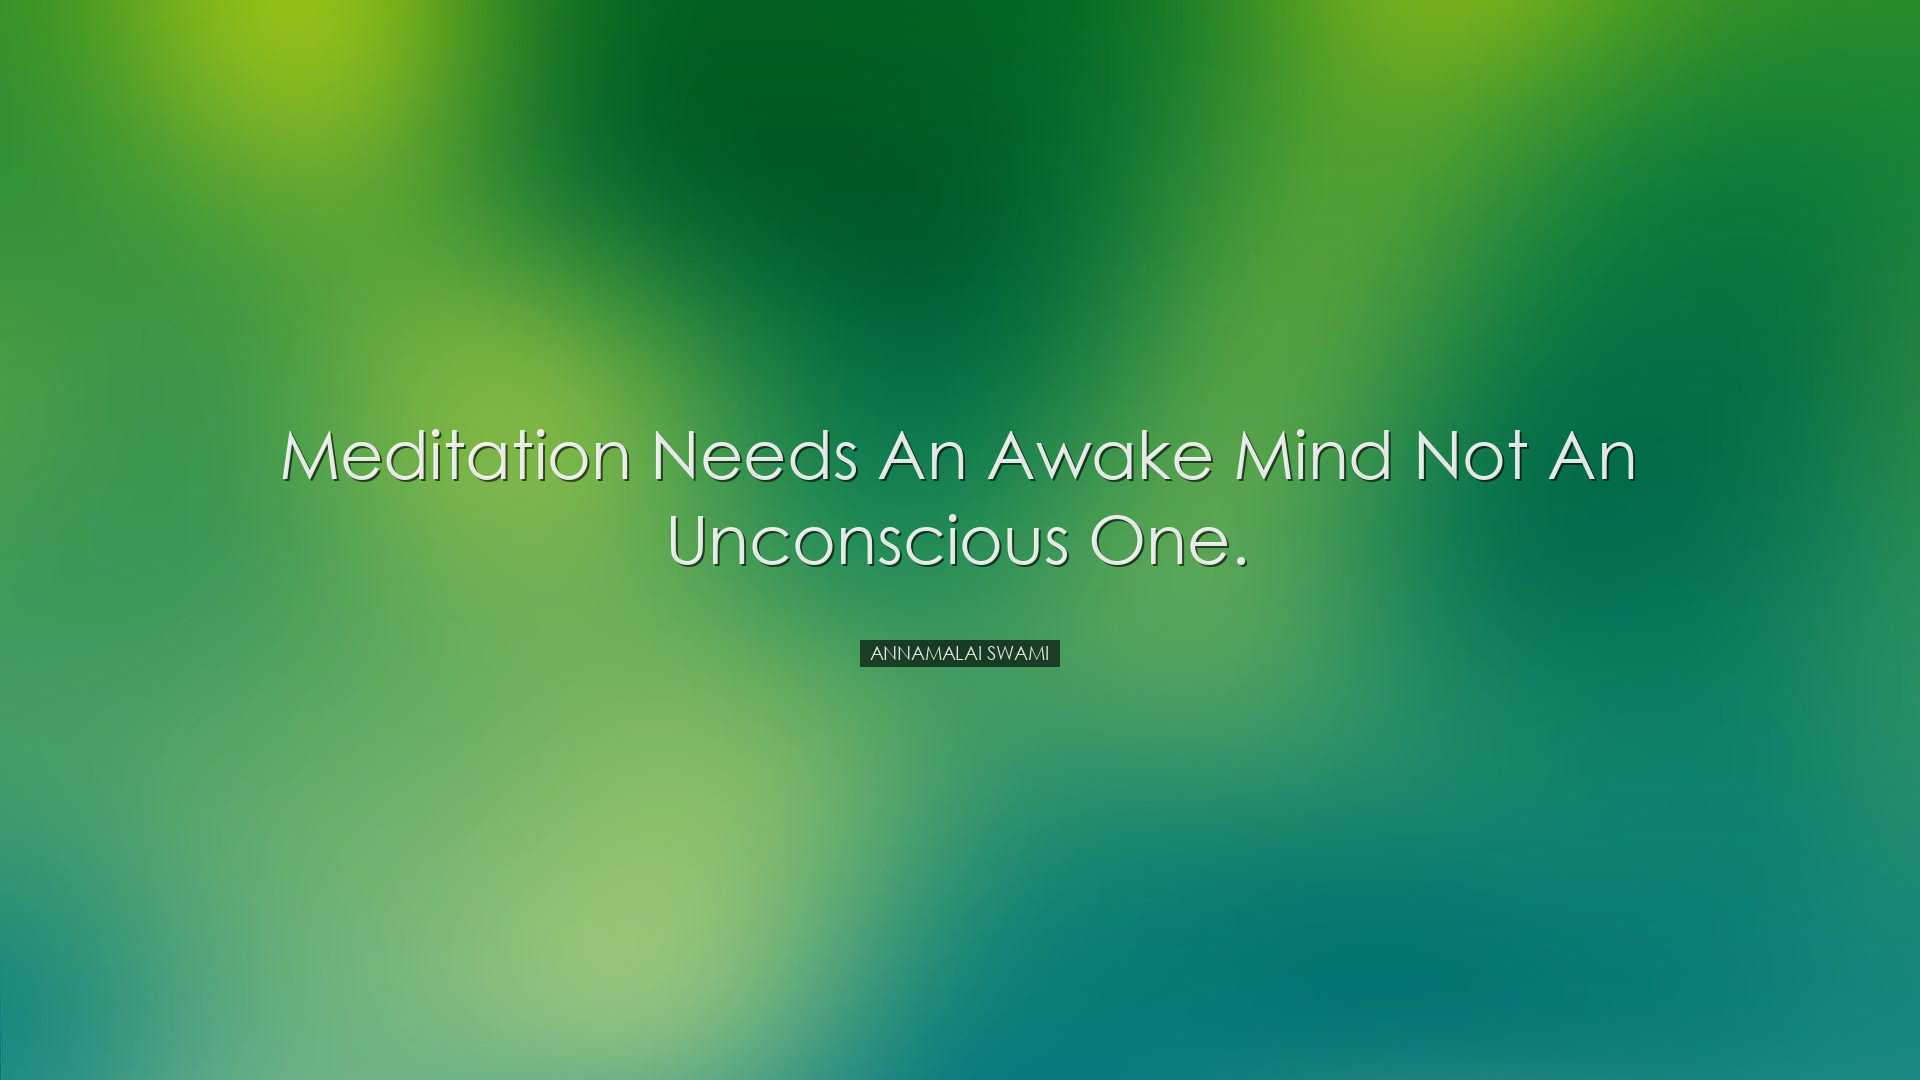 Meditation needs an awake mind not an unconscious one. - Annamalai